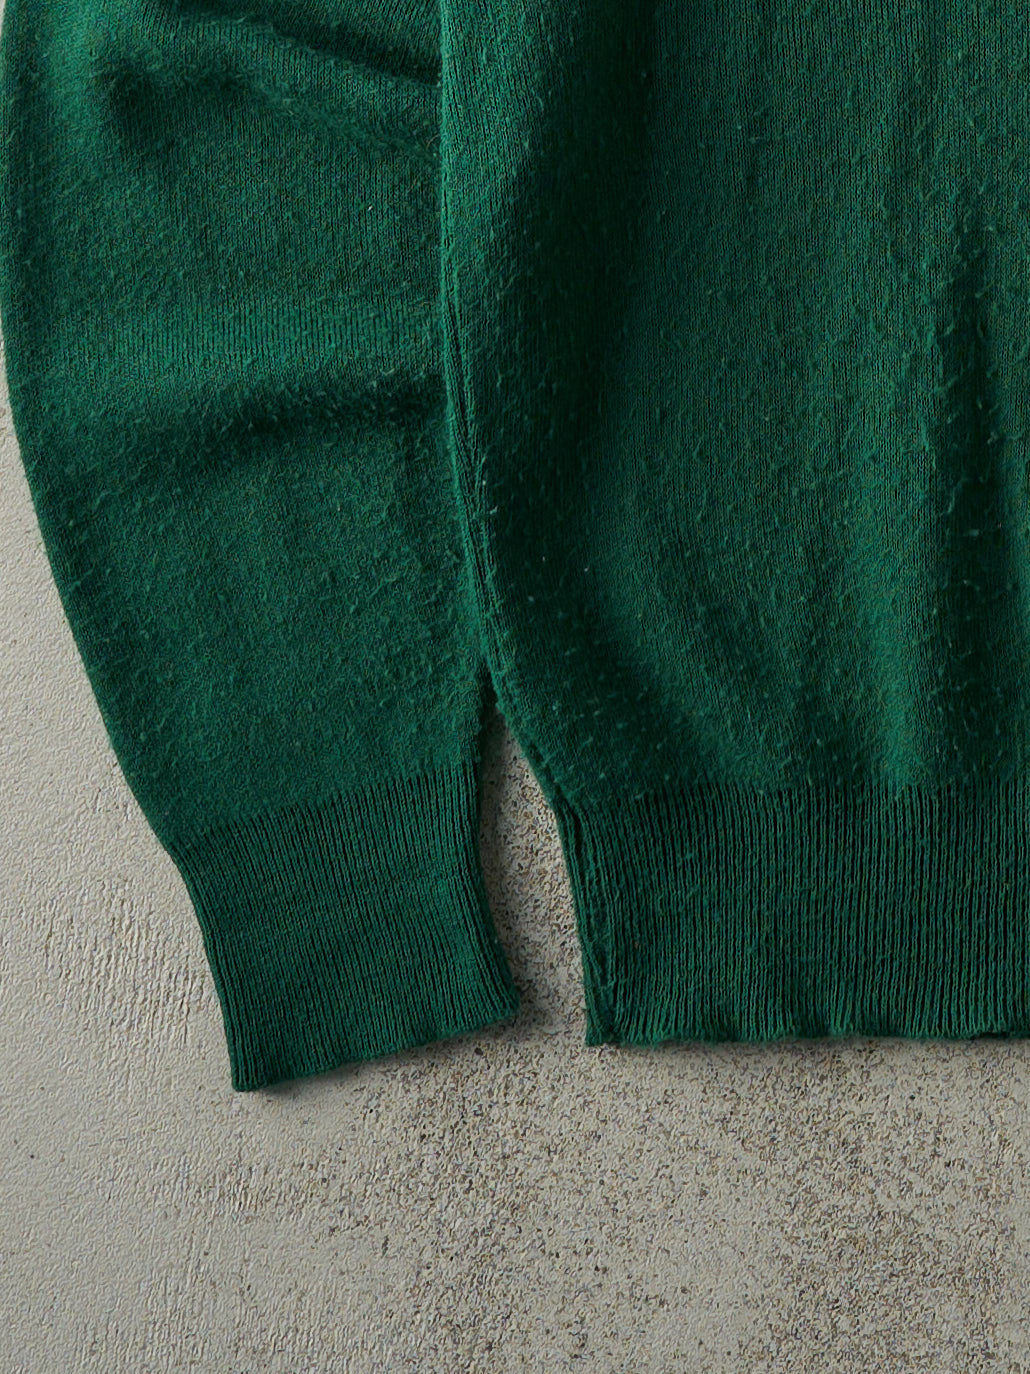 Vintage 90s Green Knit V Neck Pullover (M)